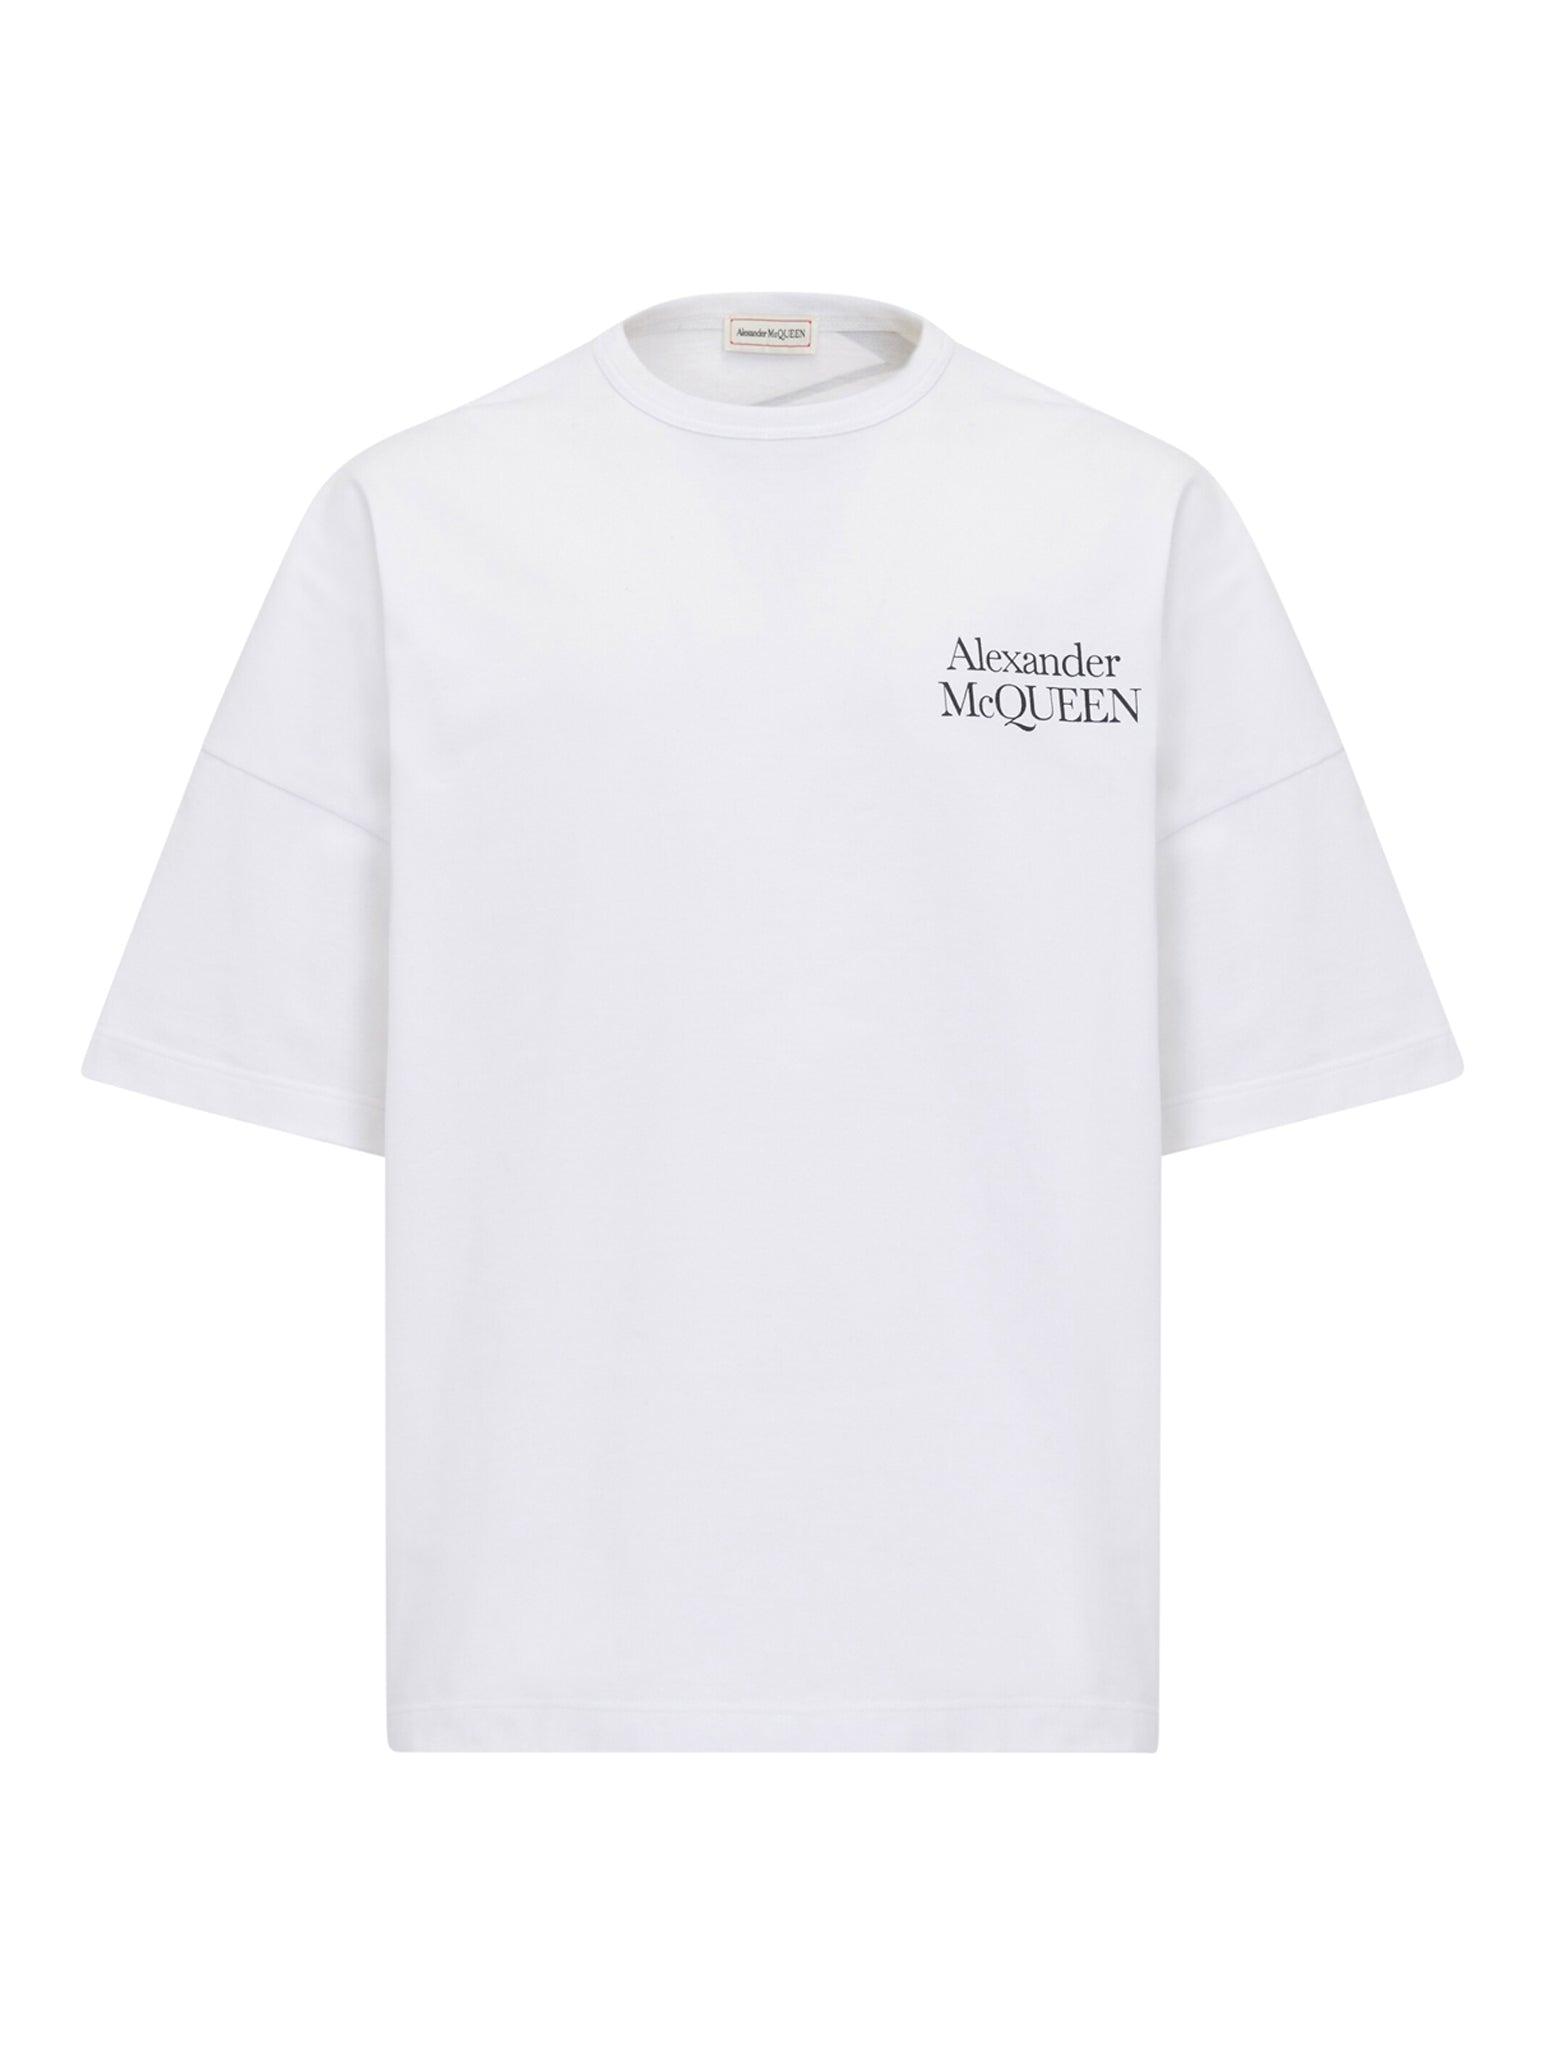 Alexander McQueen T-shirt in White for Men | Lyst